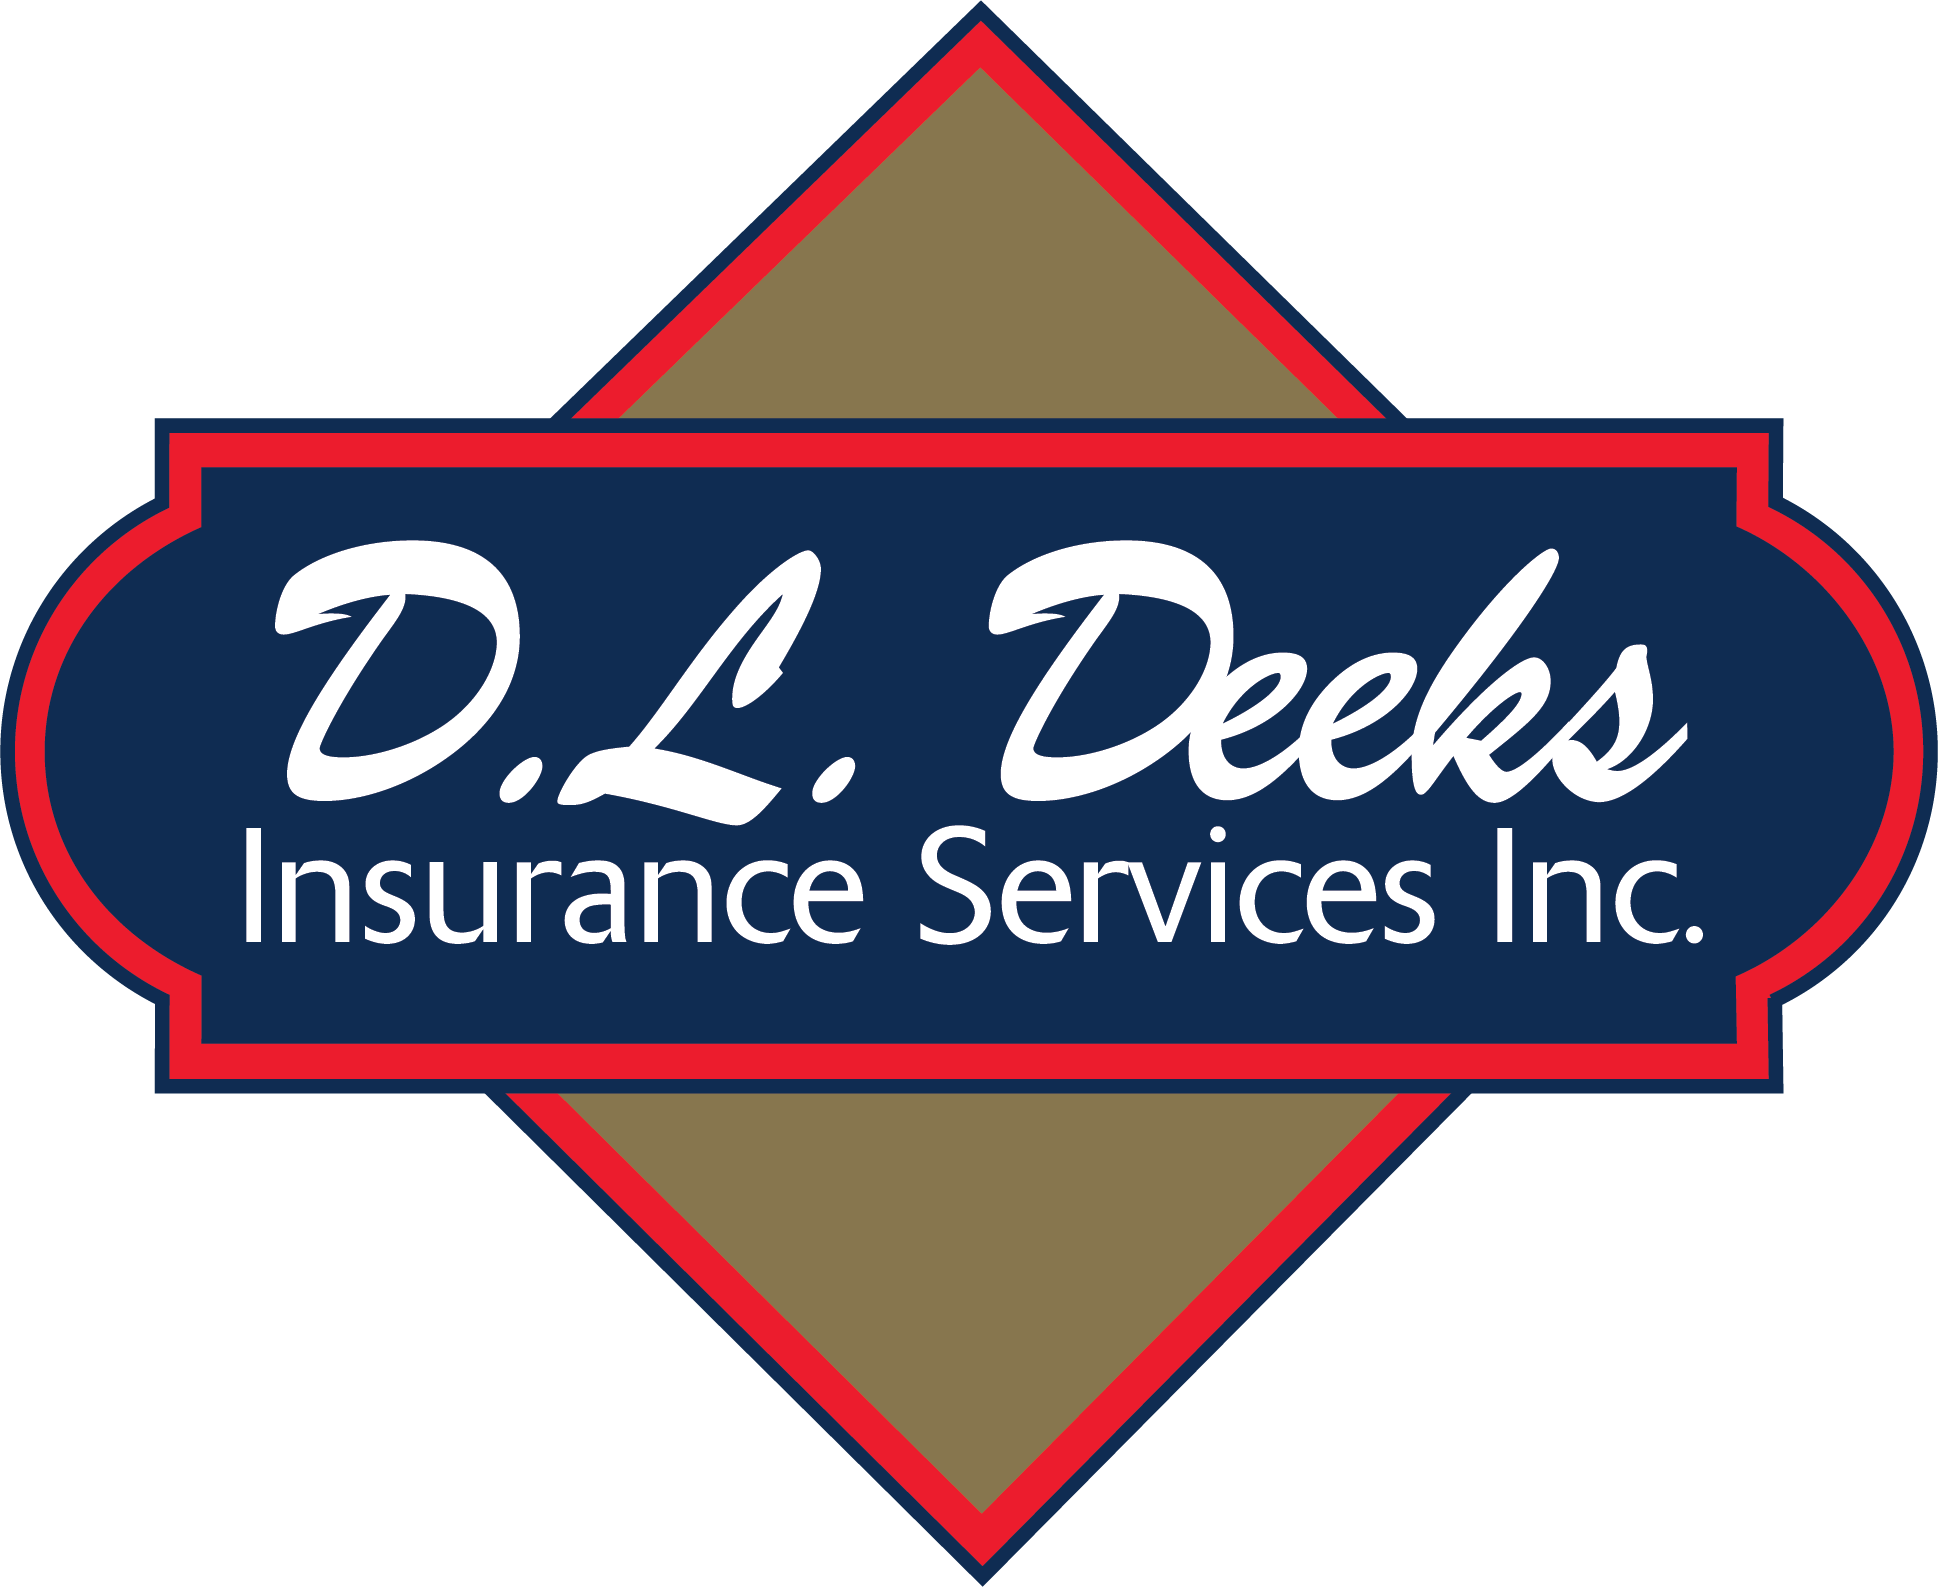 Home & Auto Claims Deeks Insurance